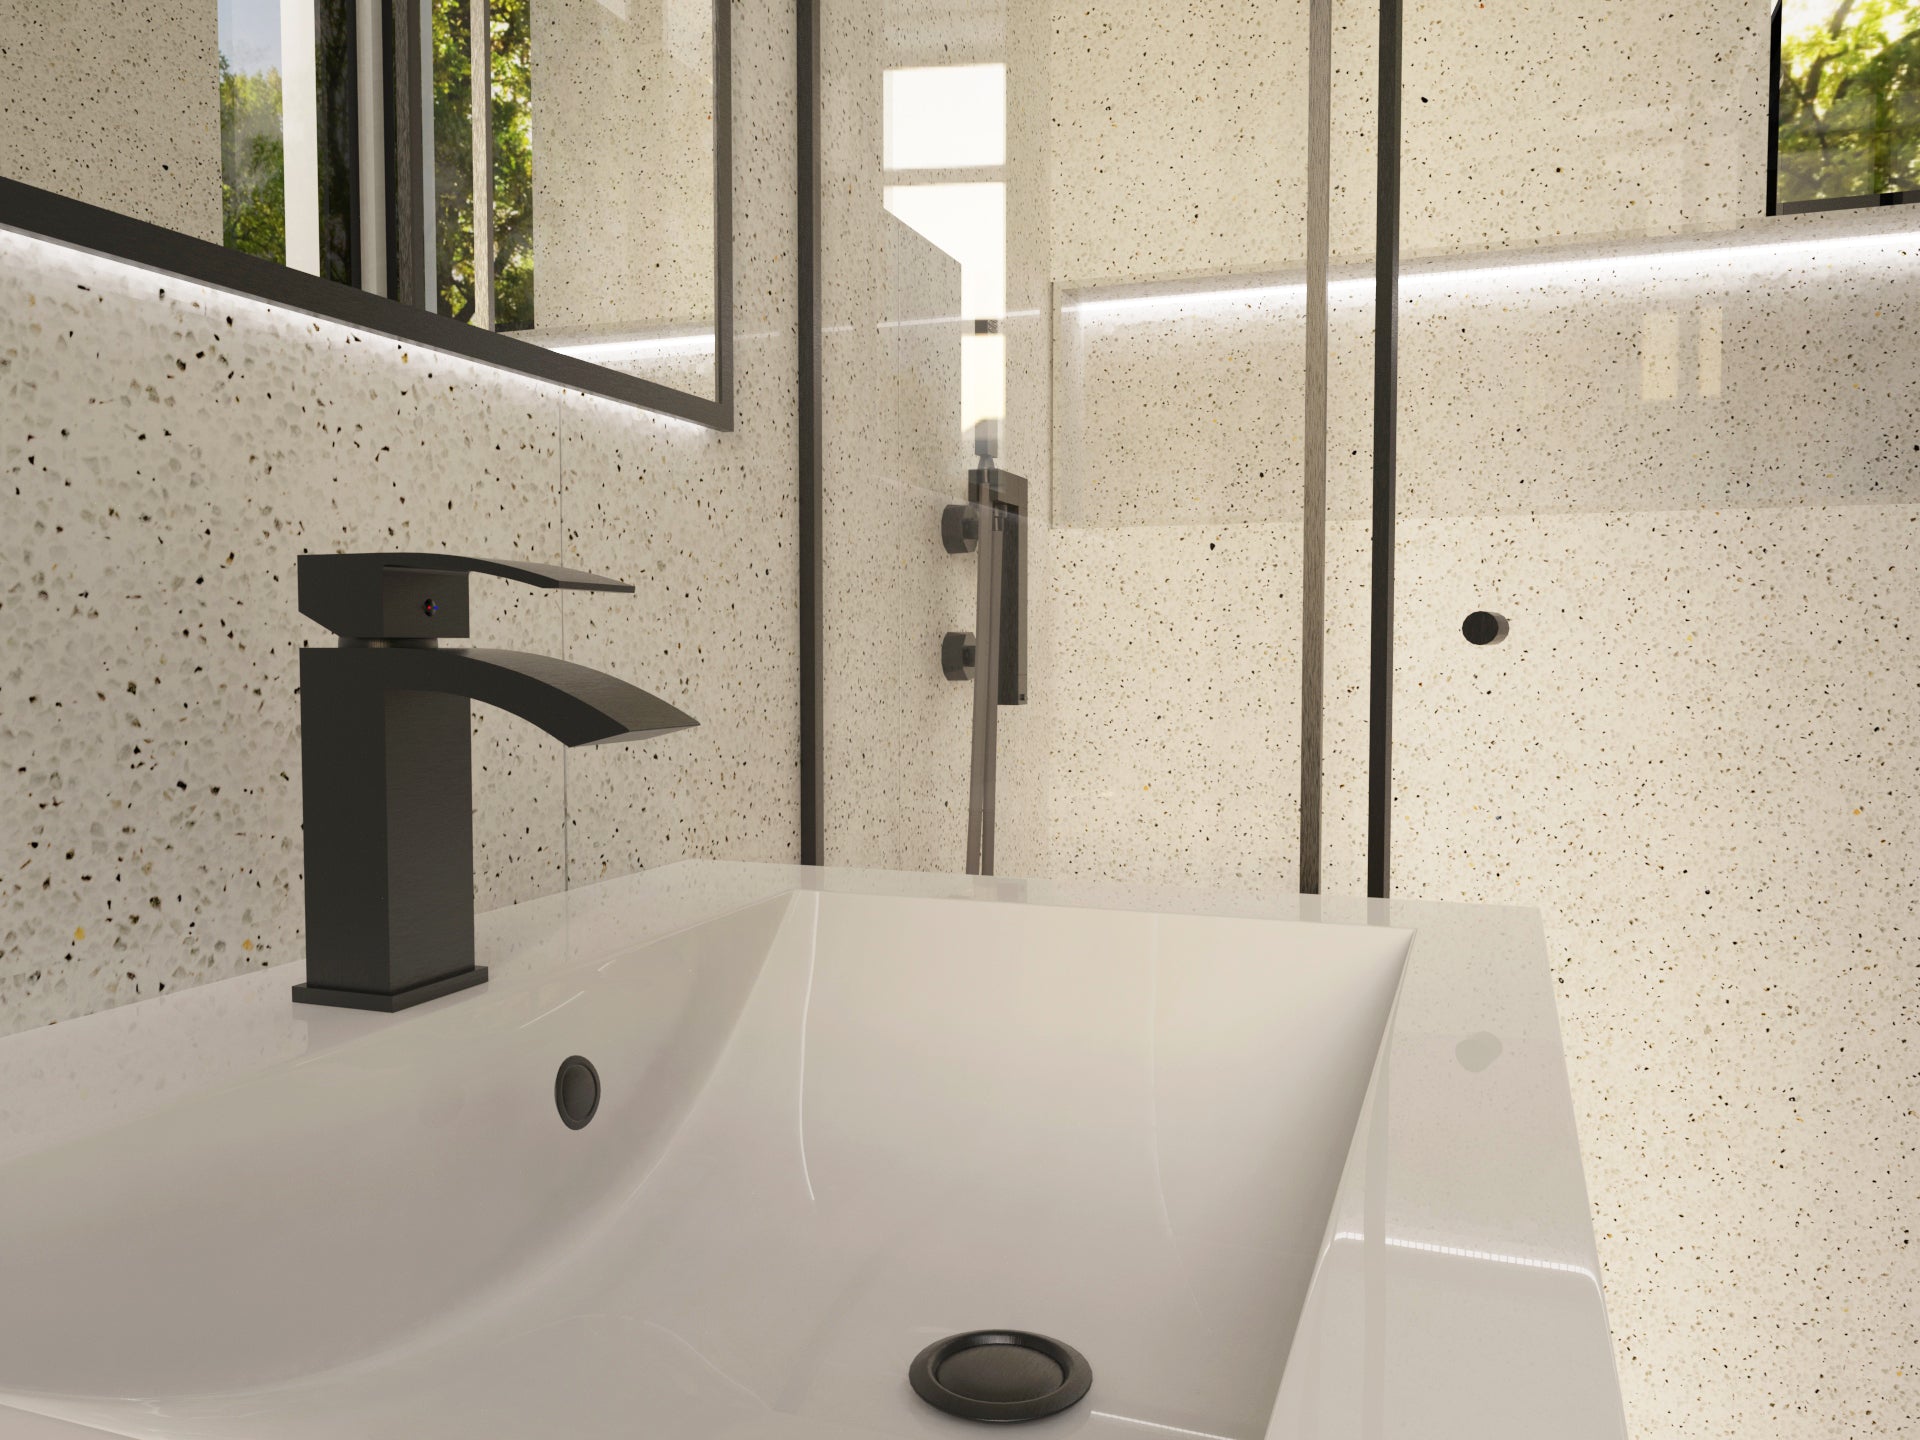 DAX Single Handle Waterfall Bathroom Faucet, Brass Body,  4-7/8 x 7 Inches (DAX-6690A)